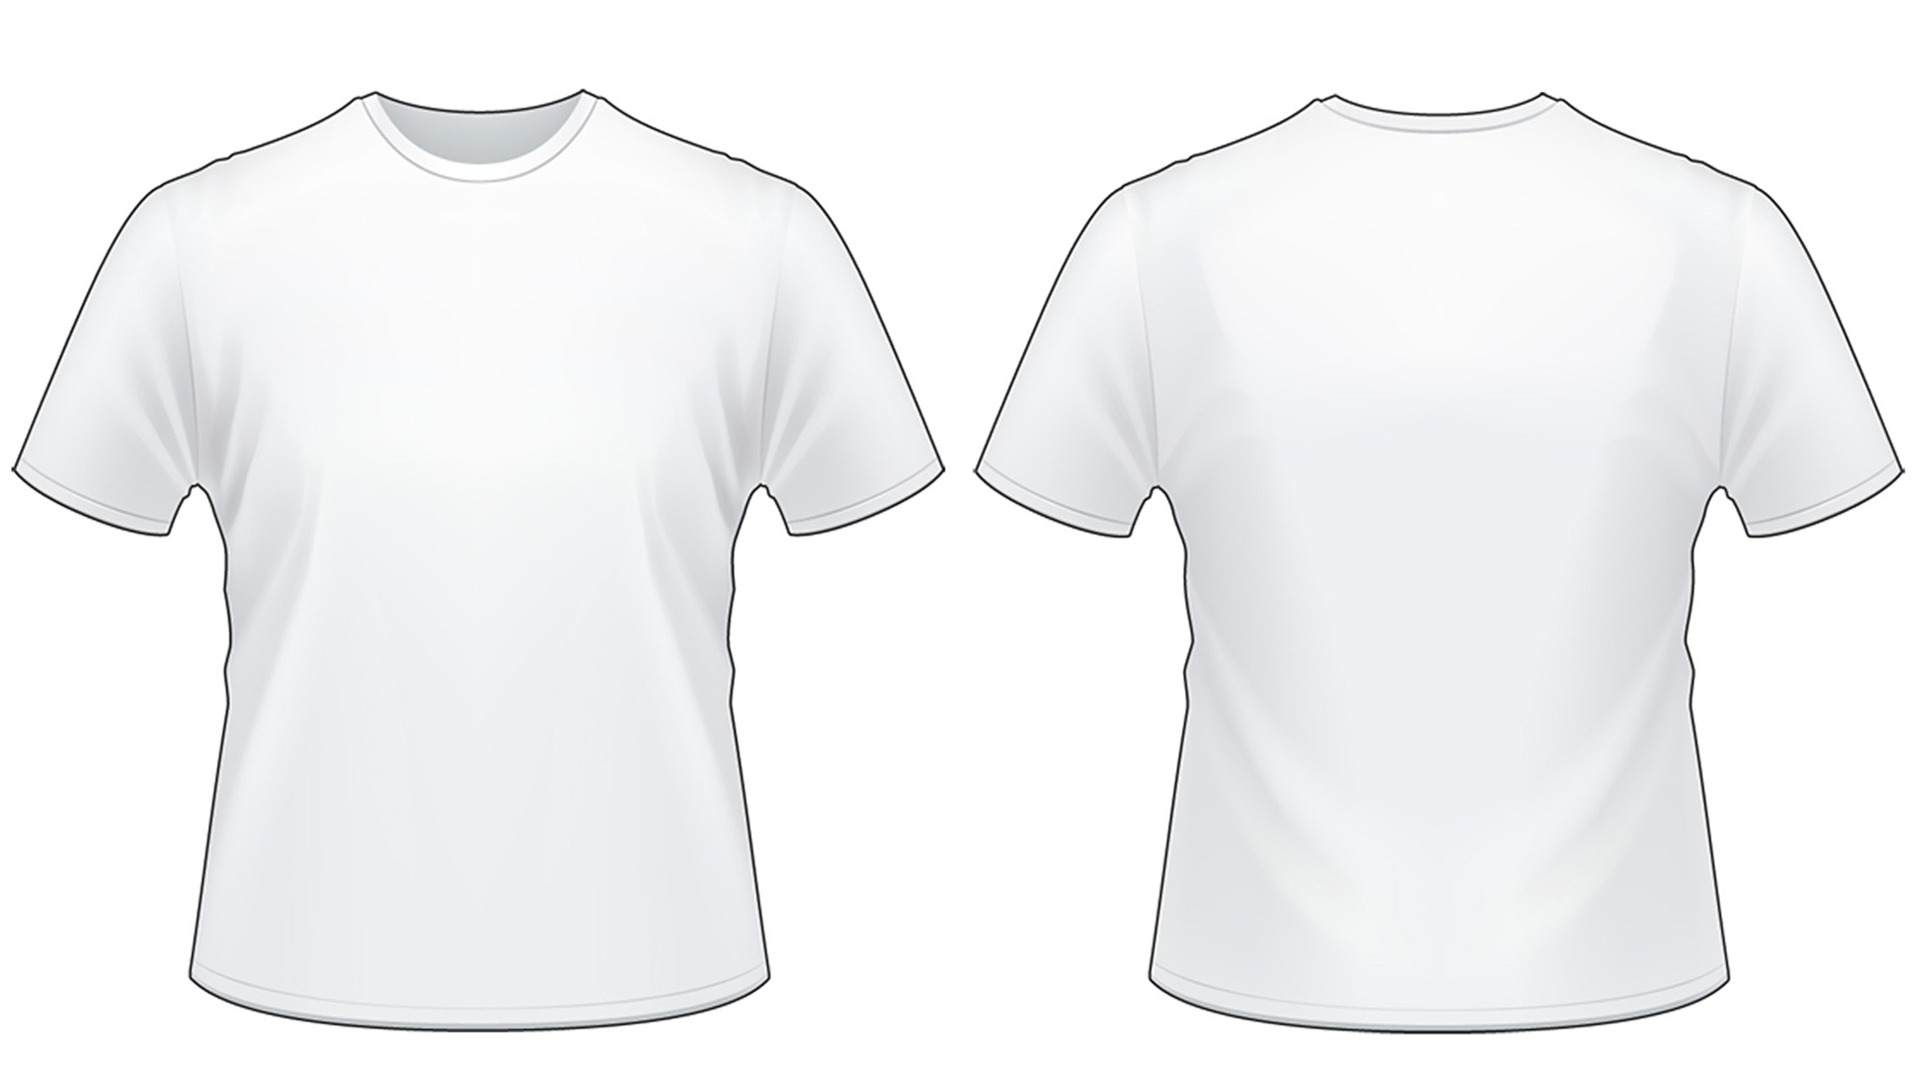 Blank Tee Shirt Template (1) - PROFESSIONAL TEMPLATES | PROFESSIONAL ...